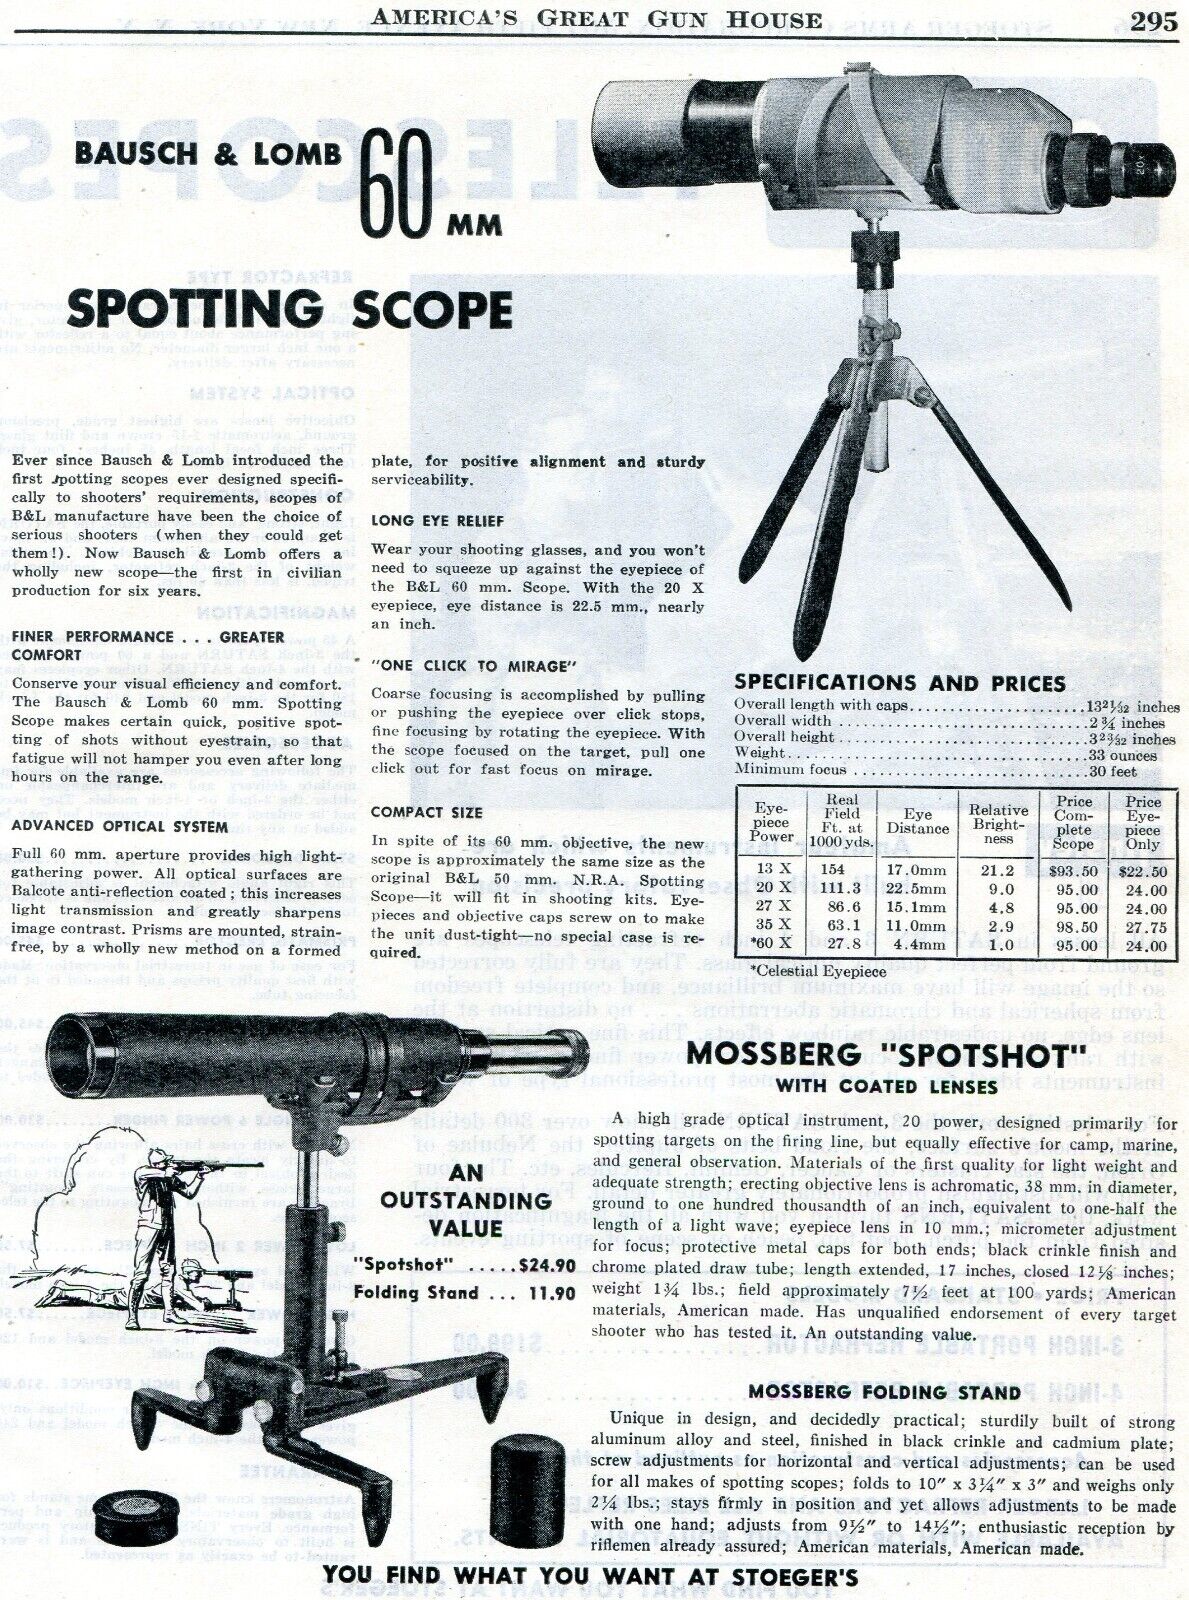 1950 Print Ad of Mossberg Spotshot & Bausch & Lomb B&L Spooting Scope